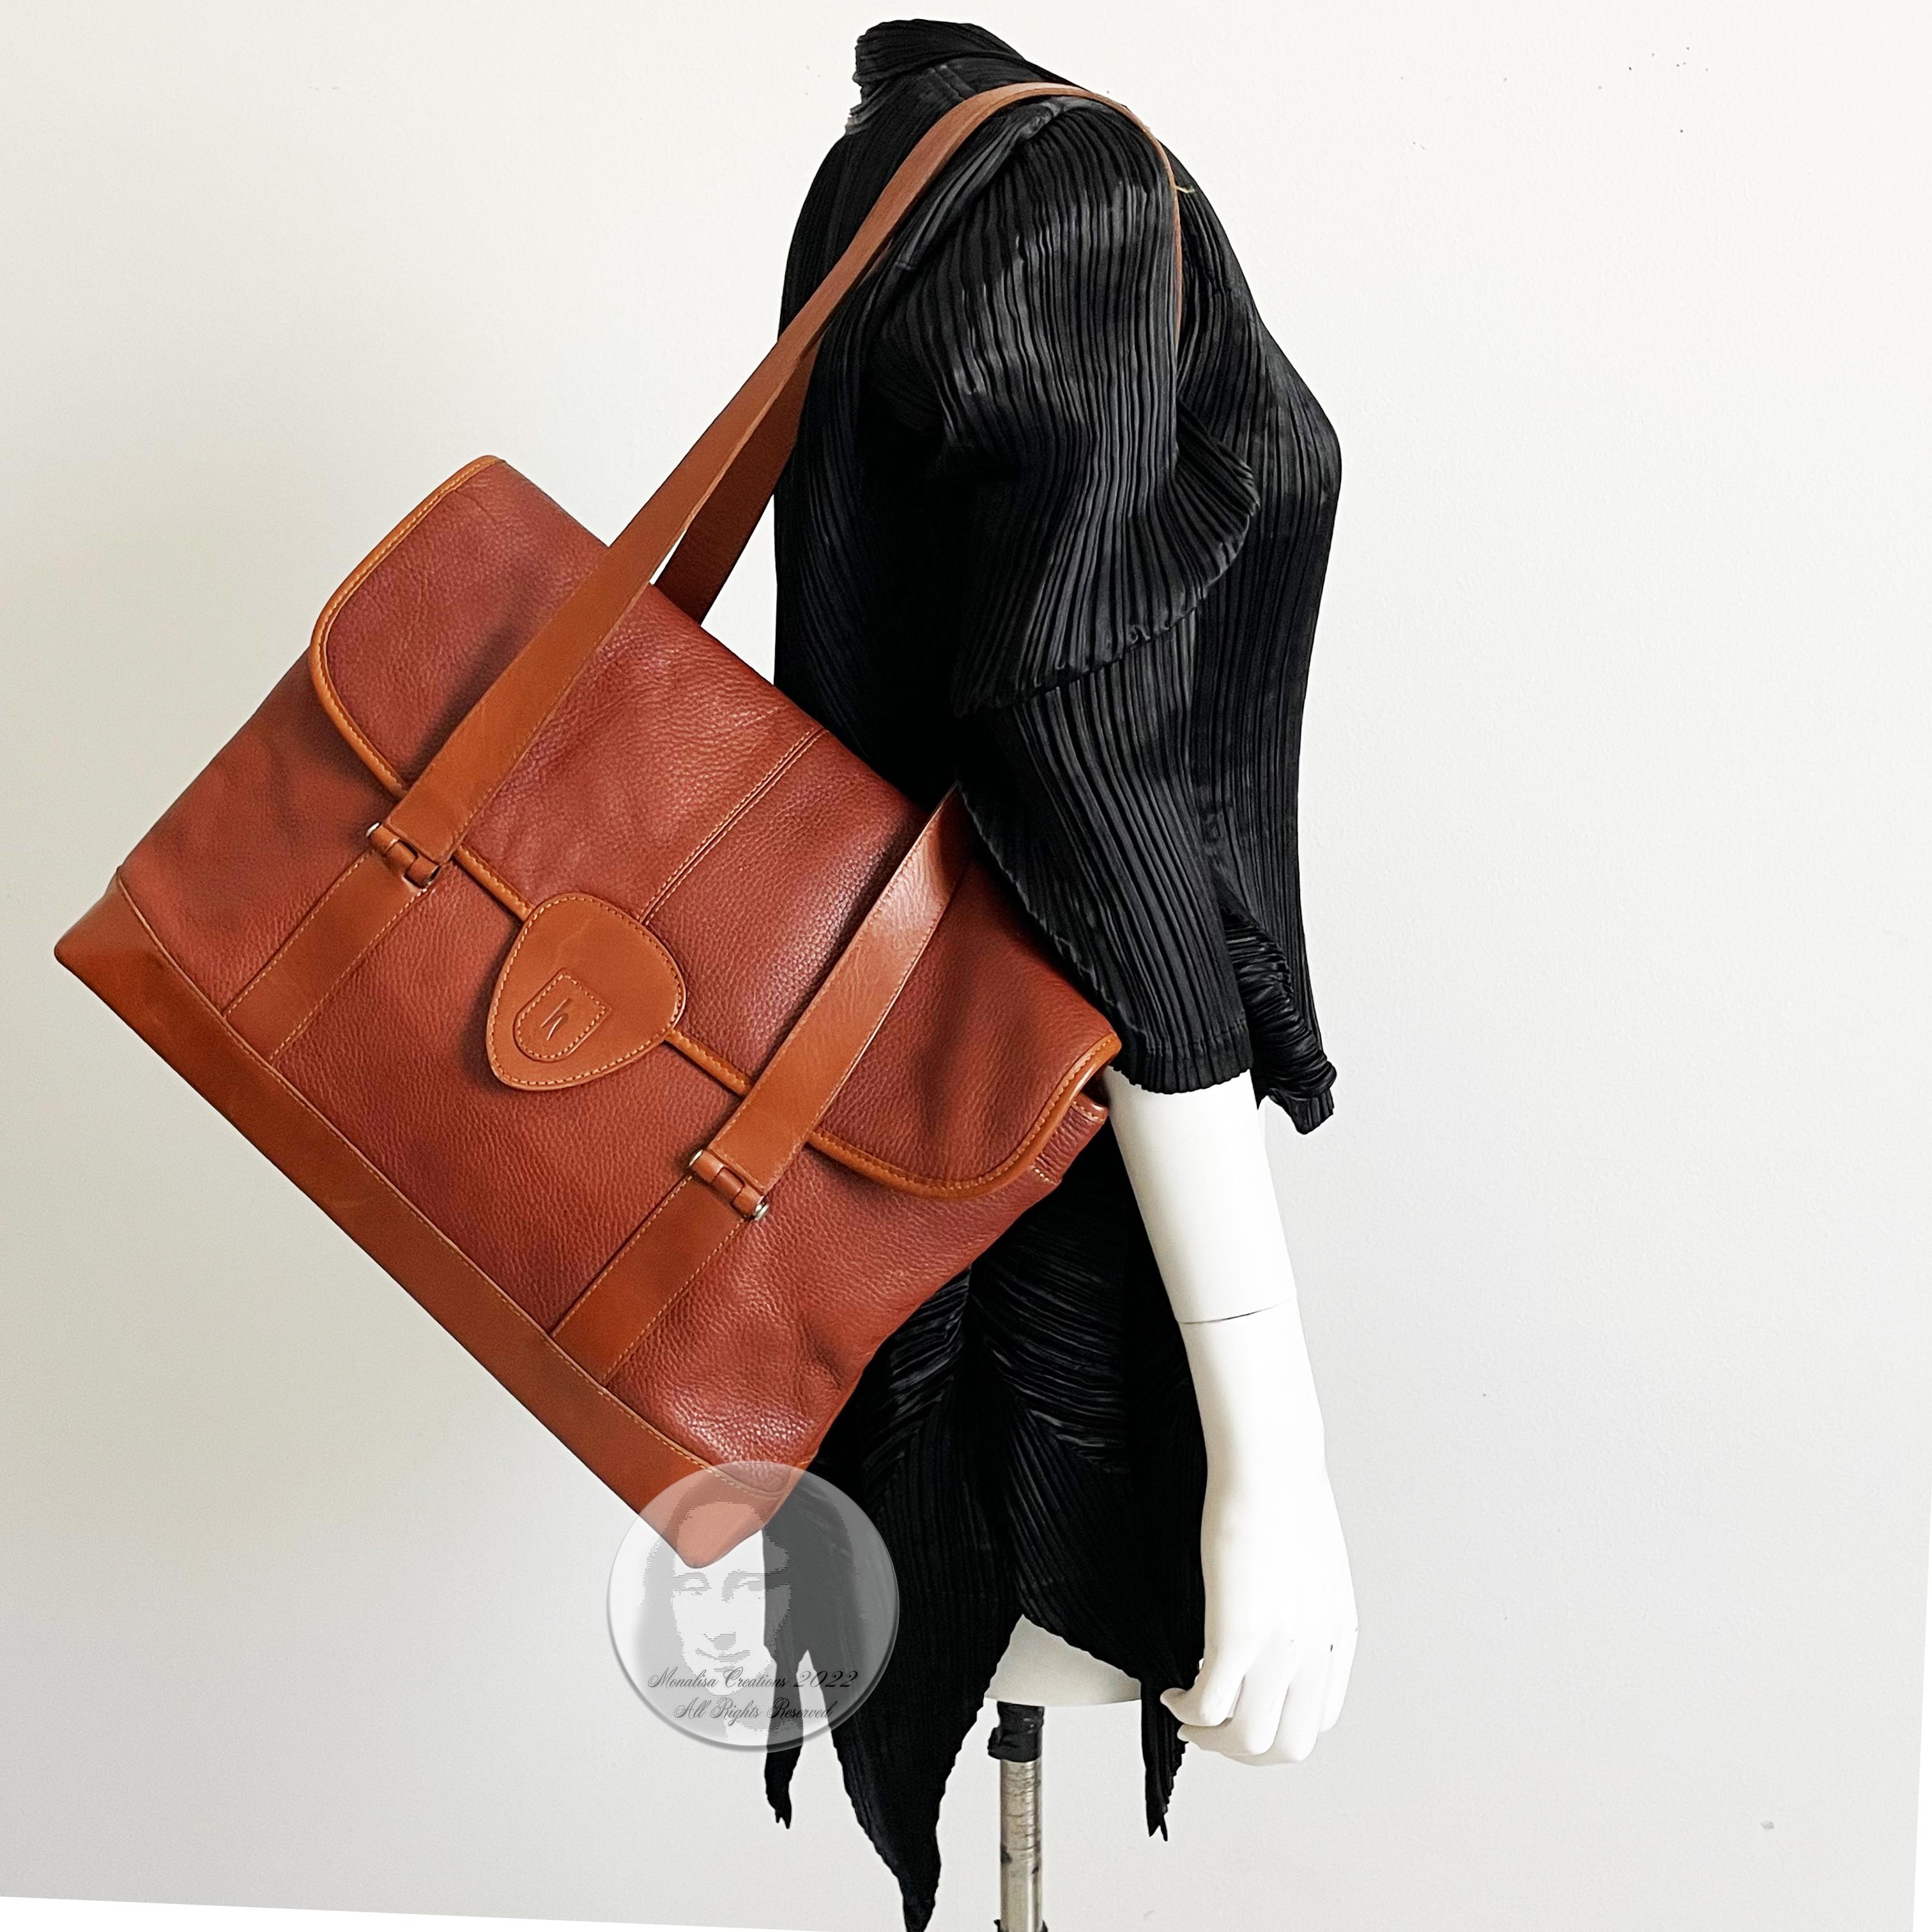  Hartmann Business Bag Briefcase Computer or Shoulder Bag British Tan Leather Unisexe 